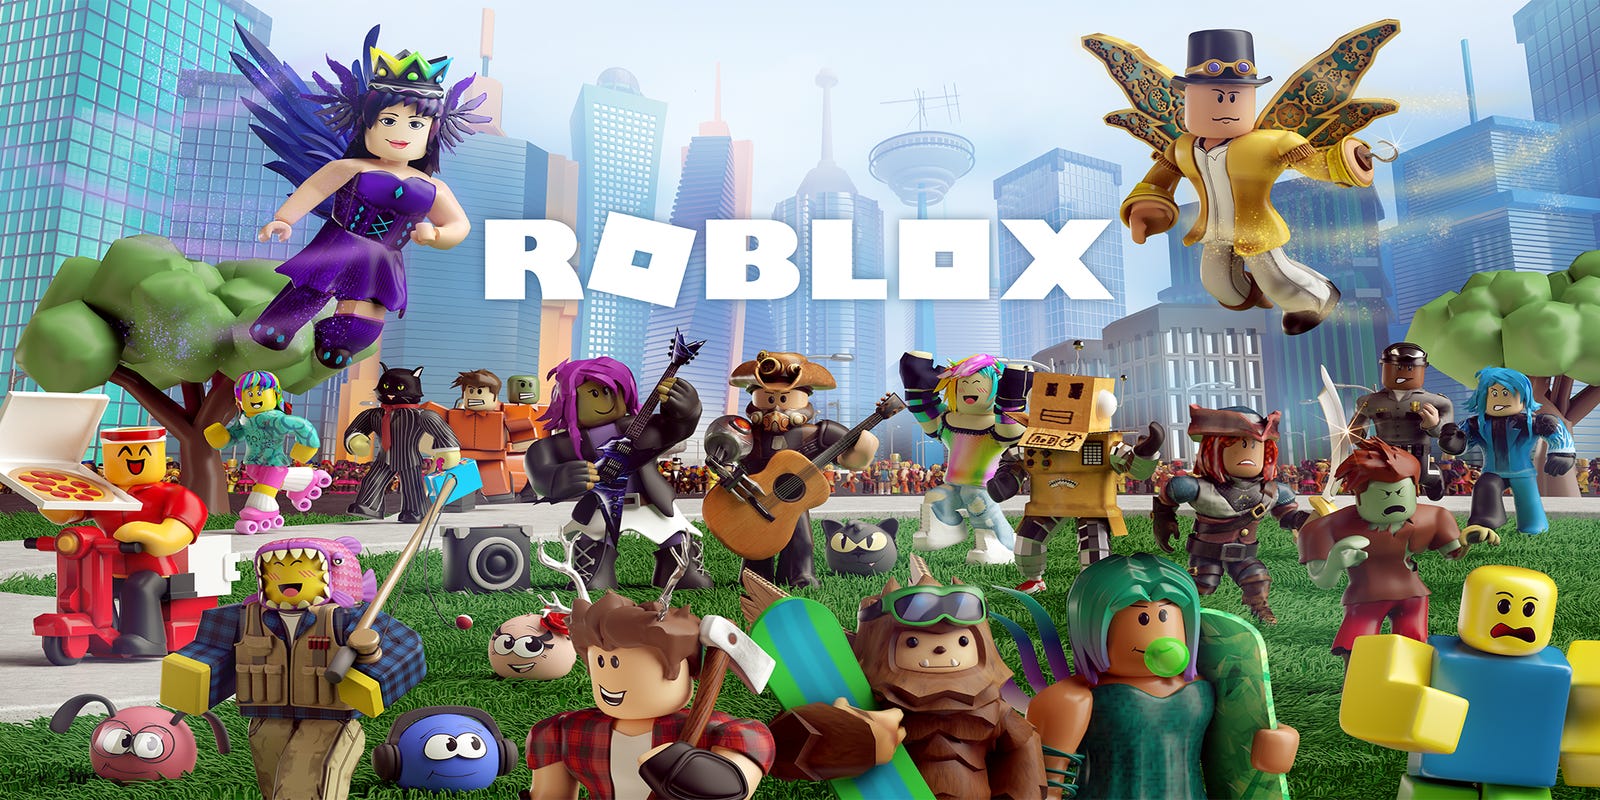 Roblox Kids Game Shows Character Being Sexually Violated Mom Warns - deniz kizi roblox id